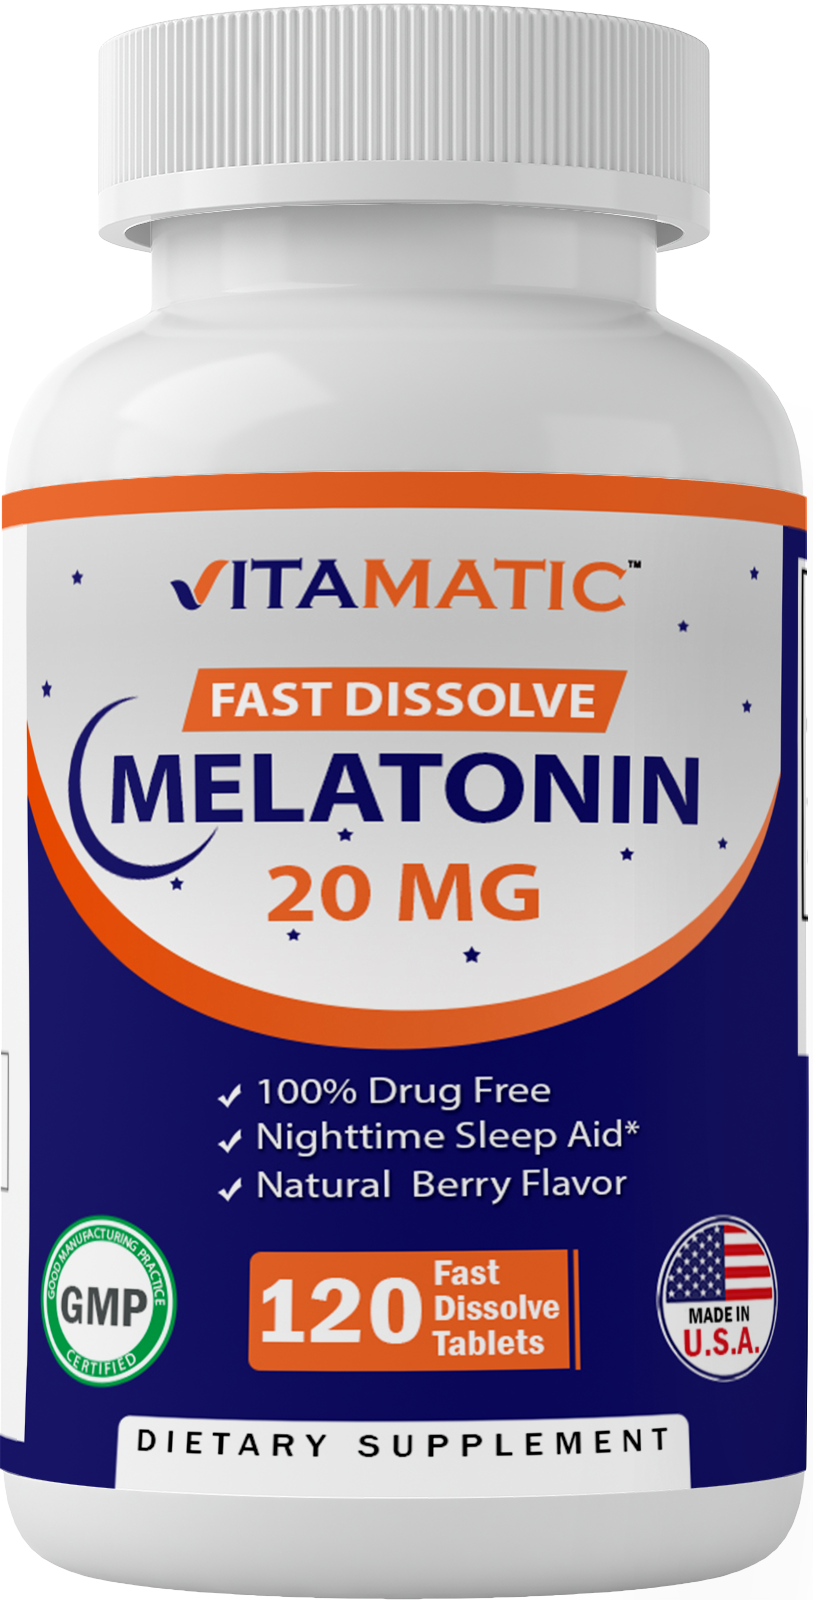 Vitamatic Melatonin 20 mg Fast Dissolve 120 Tablets ...